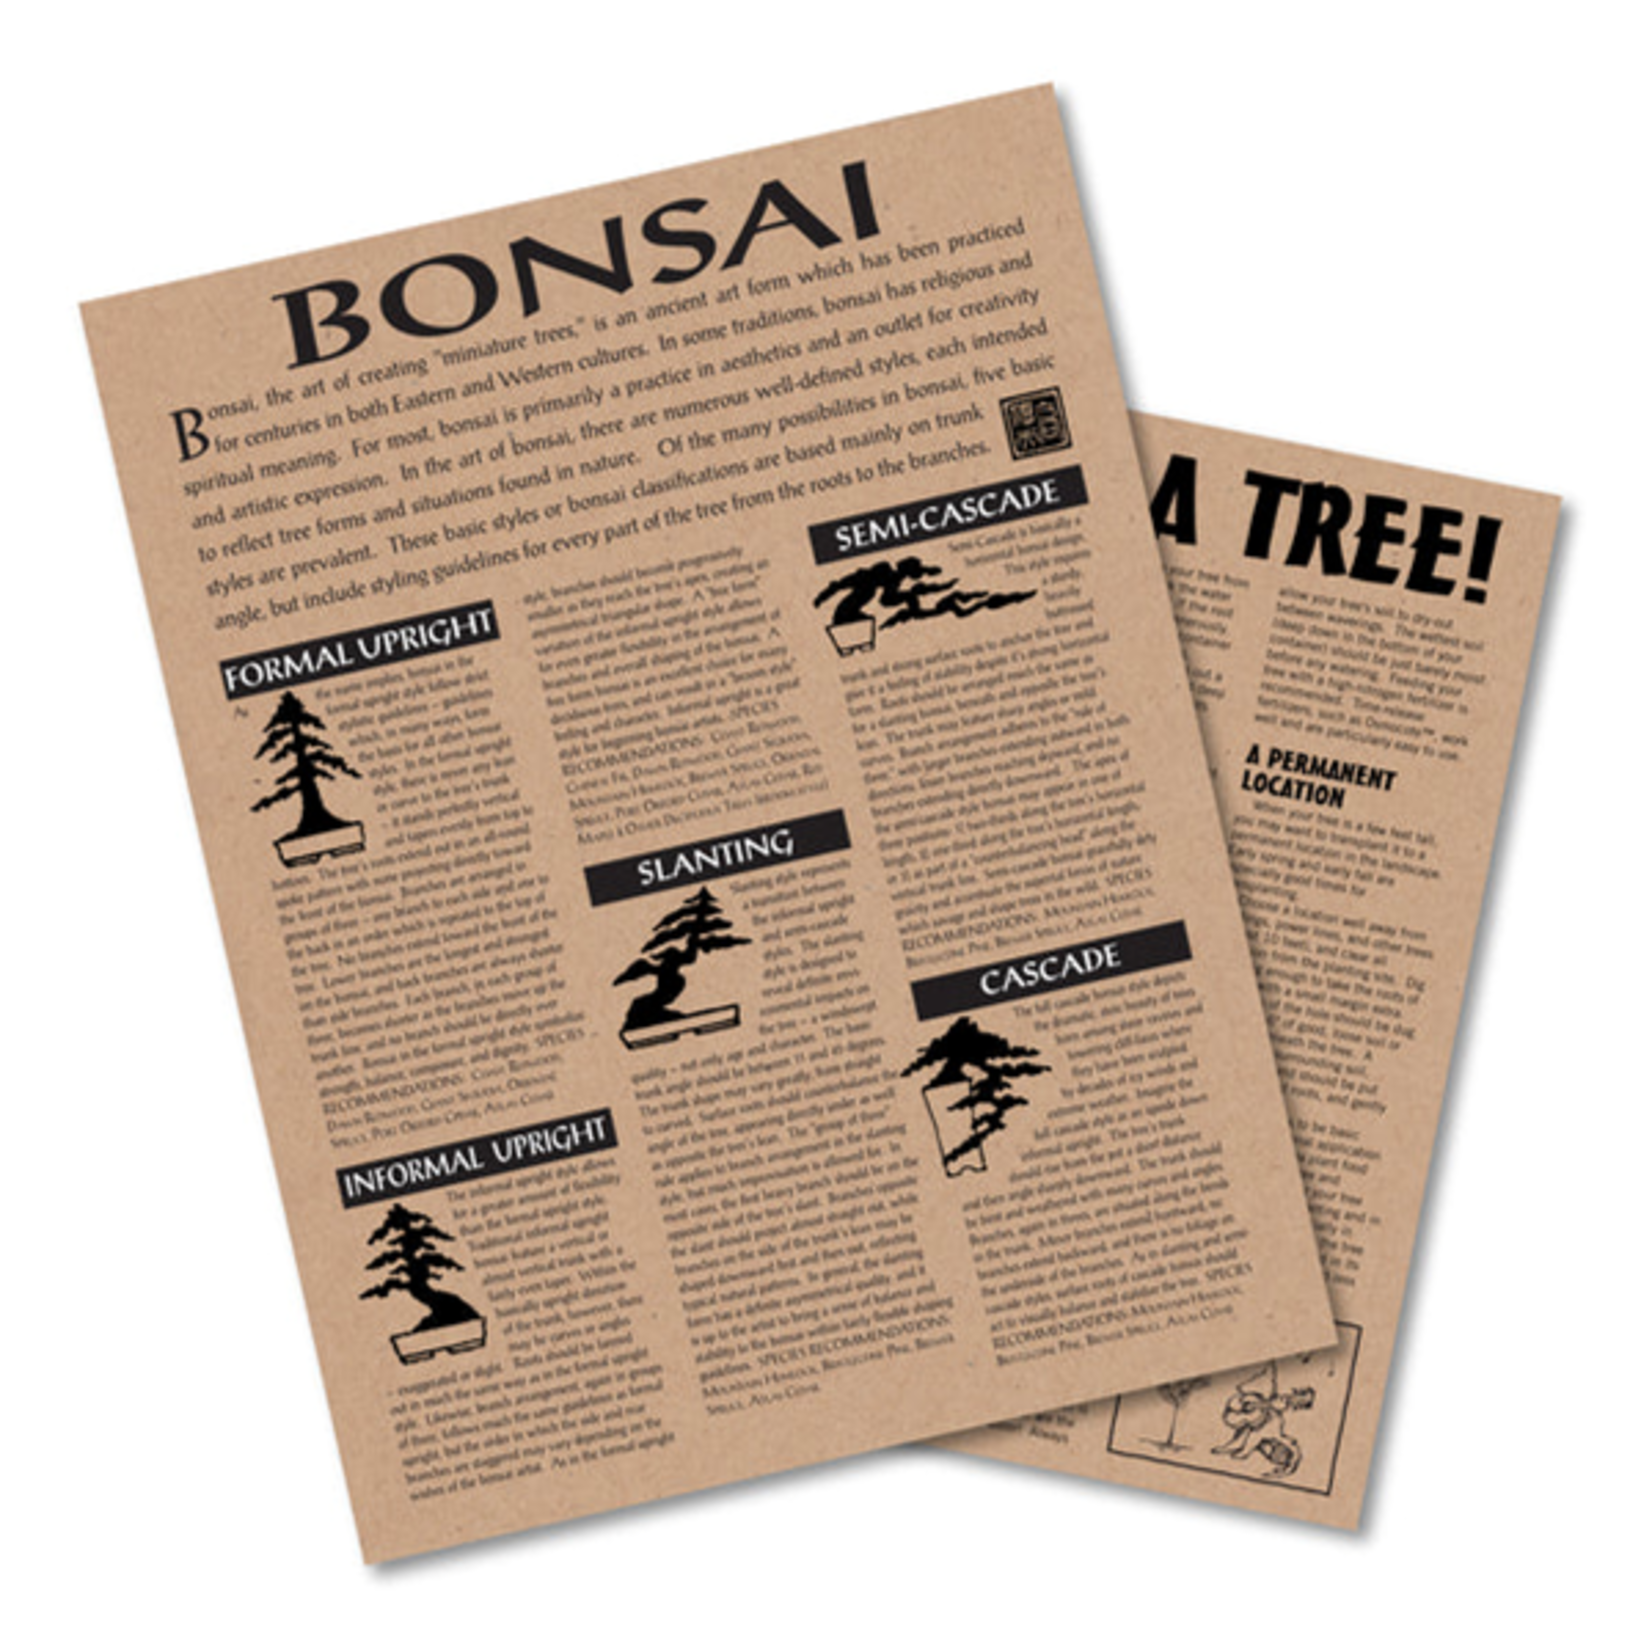 Japanese Maple Bonsai Tree | Seed Grow Kit